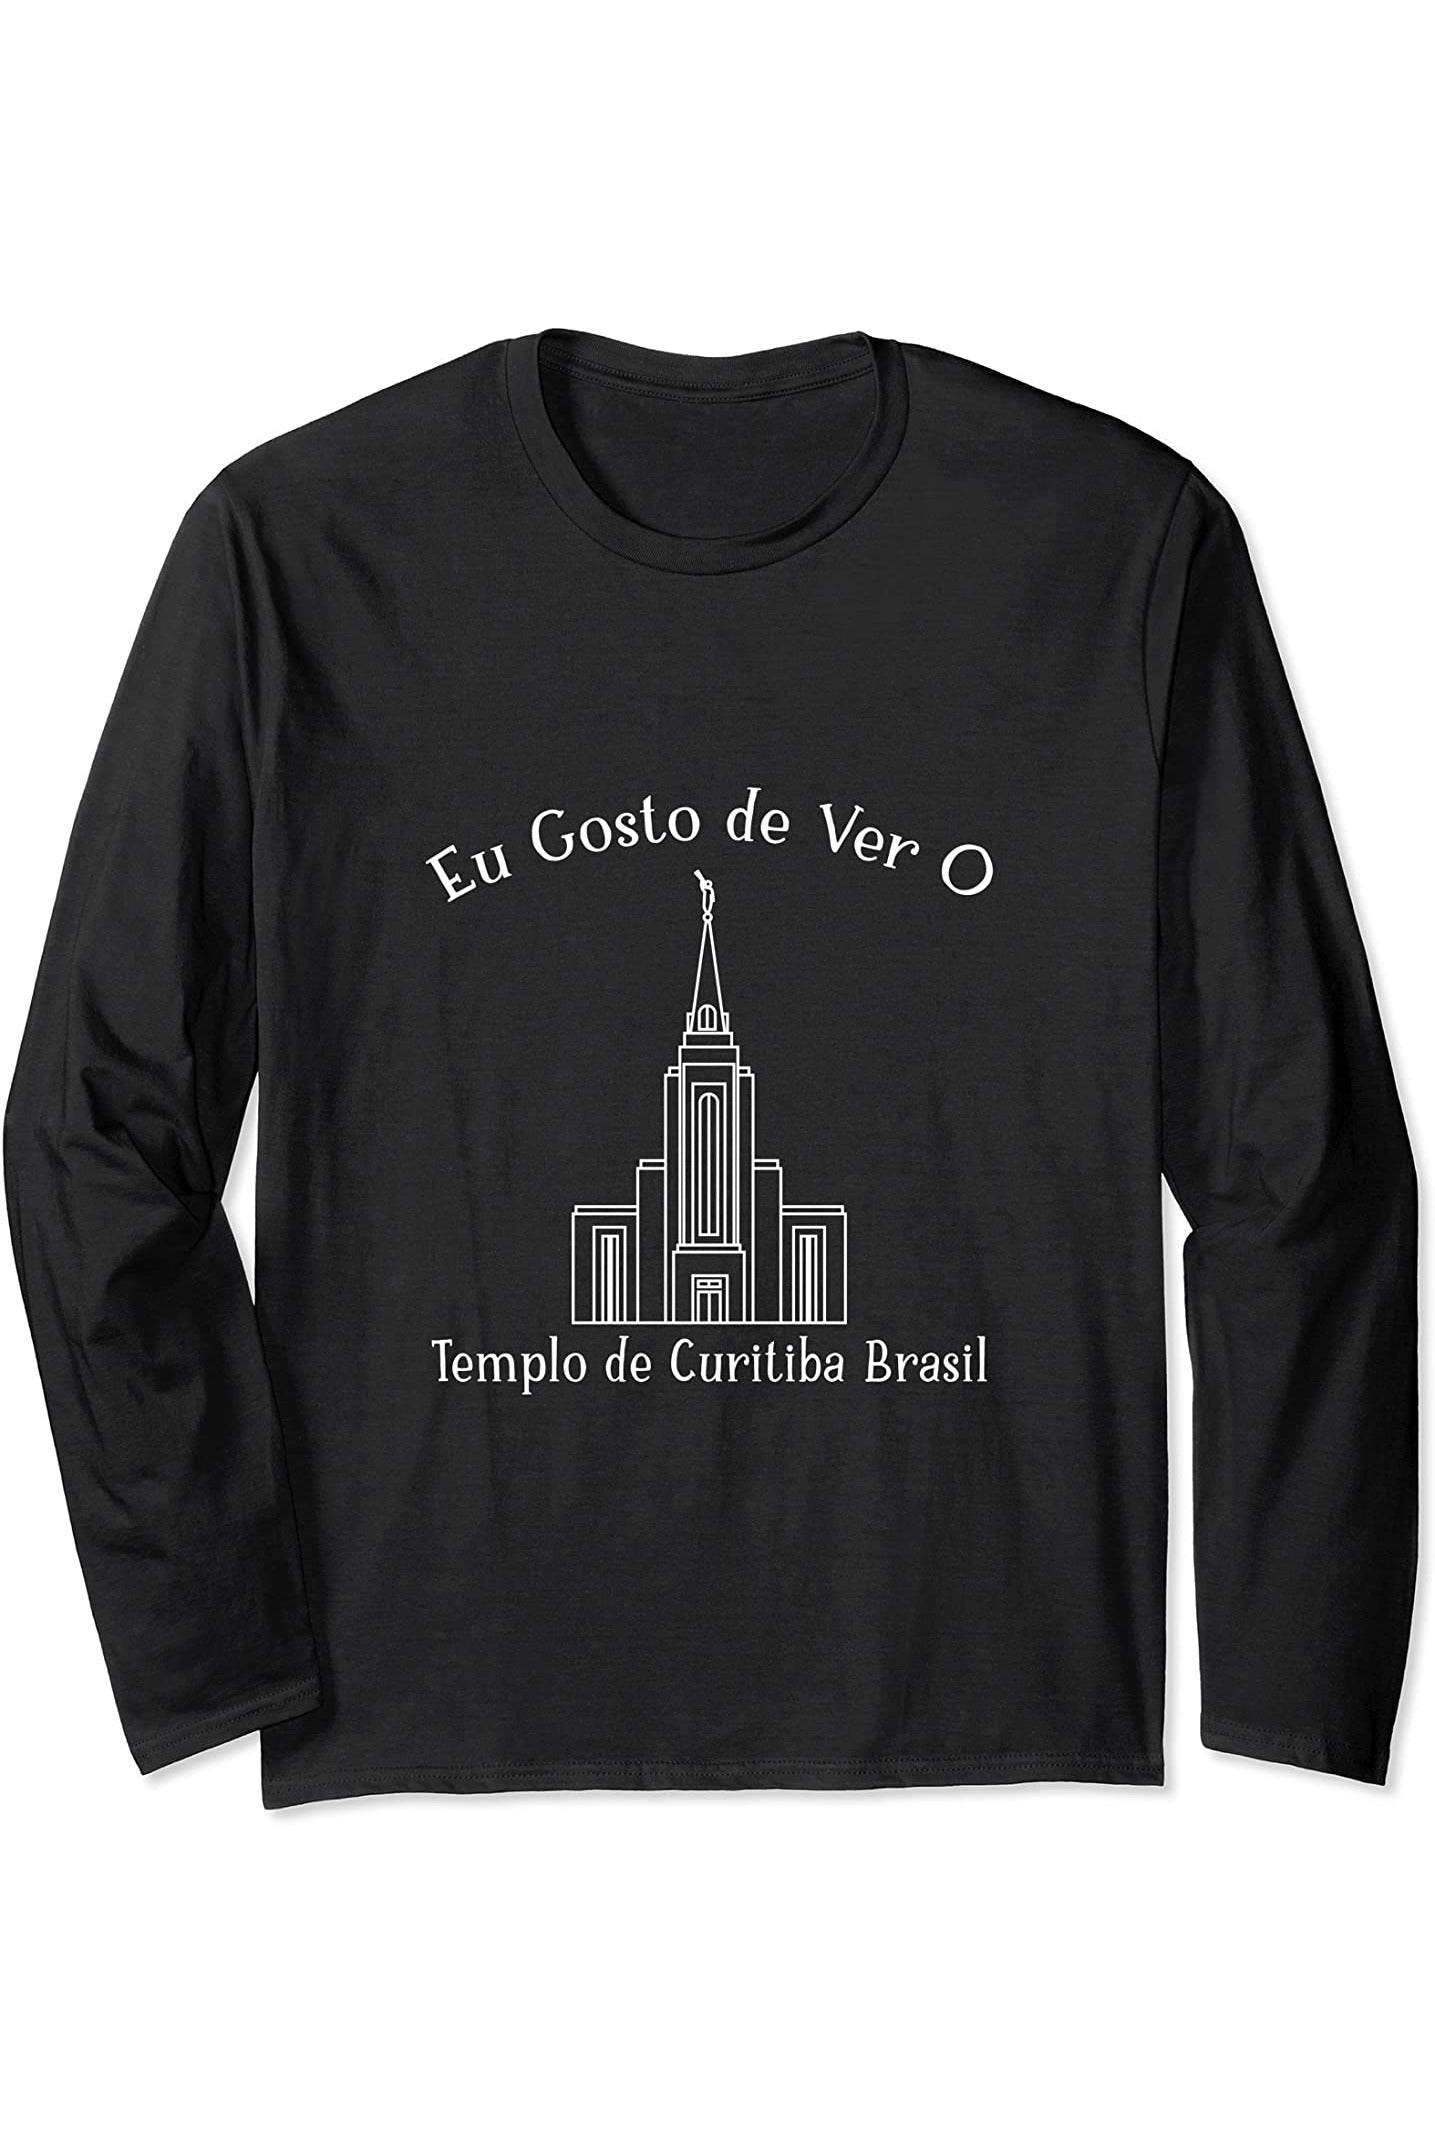 Curitiba Brazil Temple Long Sleeve T-Shirt - Happy Style (Portuguese) US